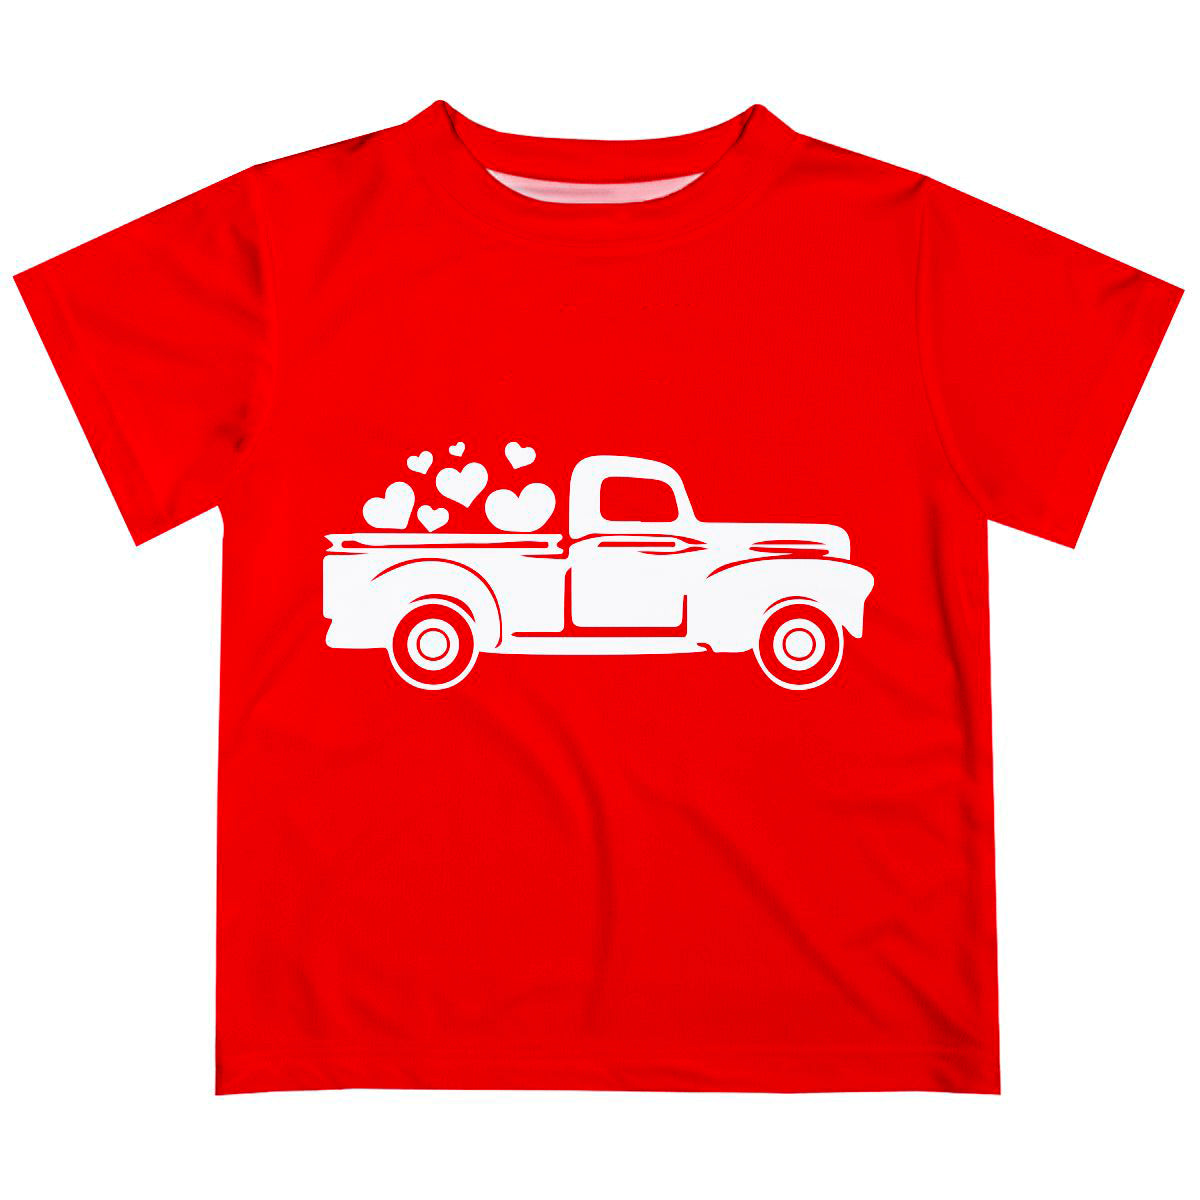 Heart Truck Name Red Short Sleeve Tee Shirt - Wimziy&Co.